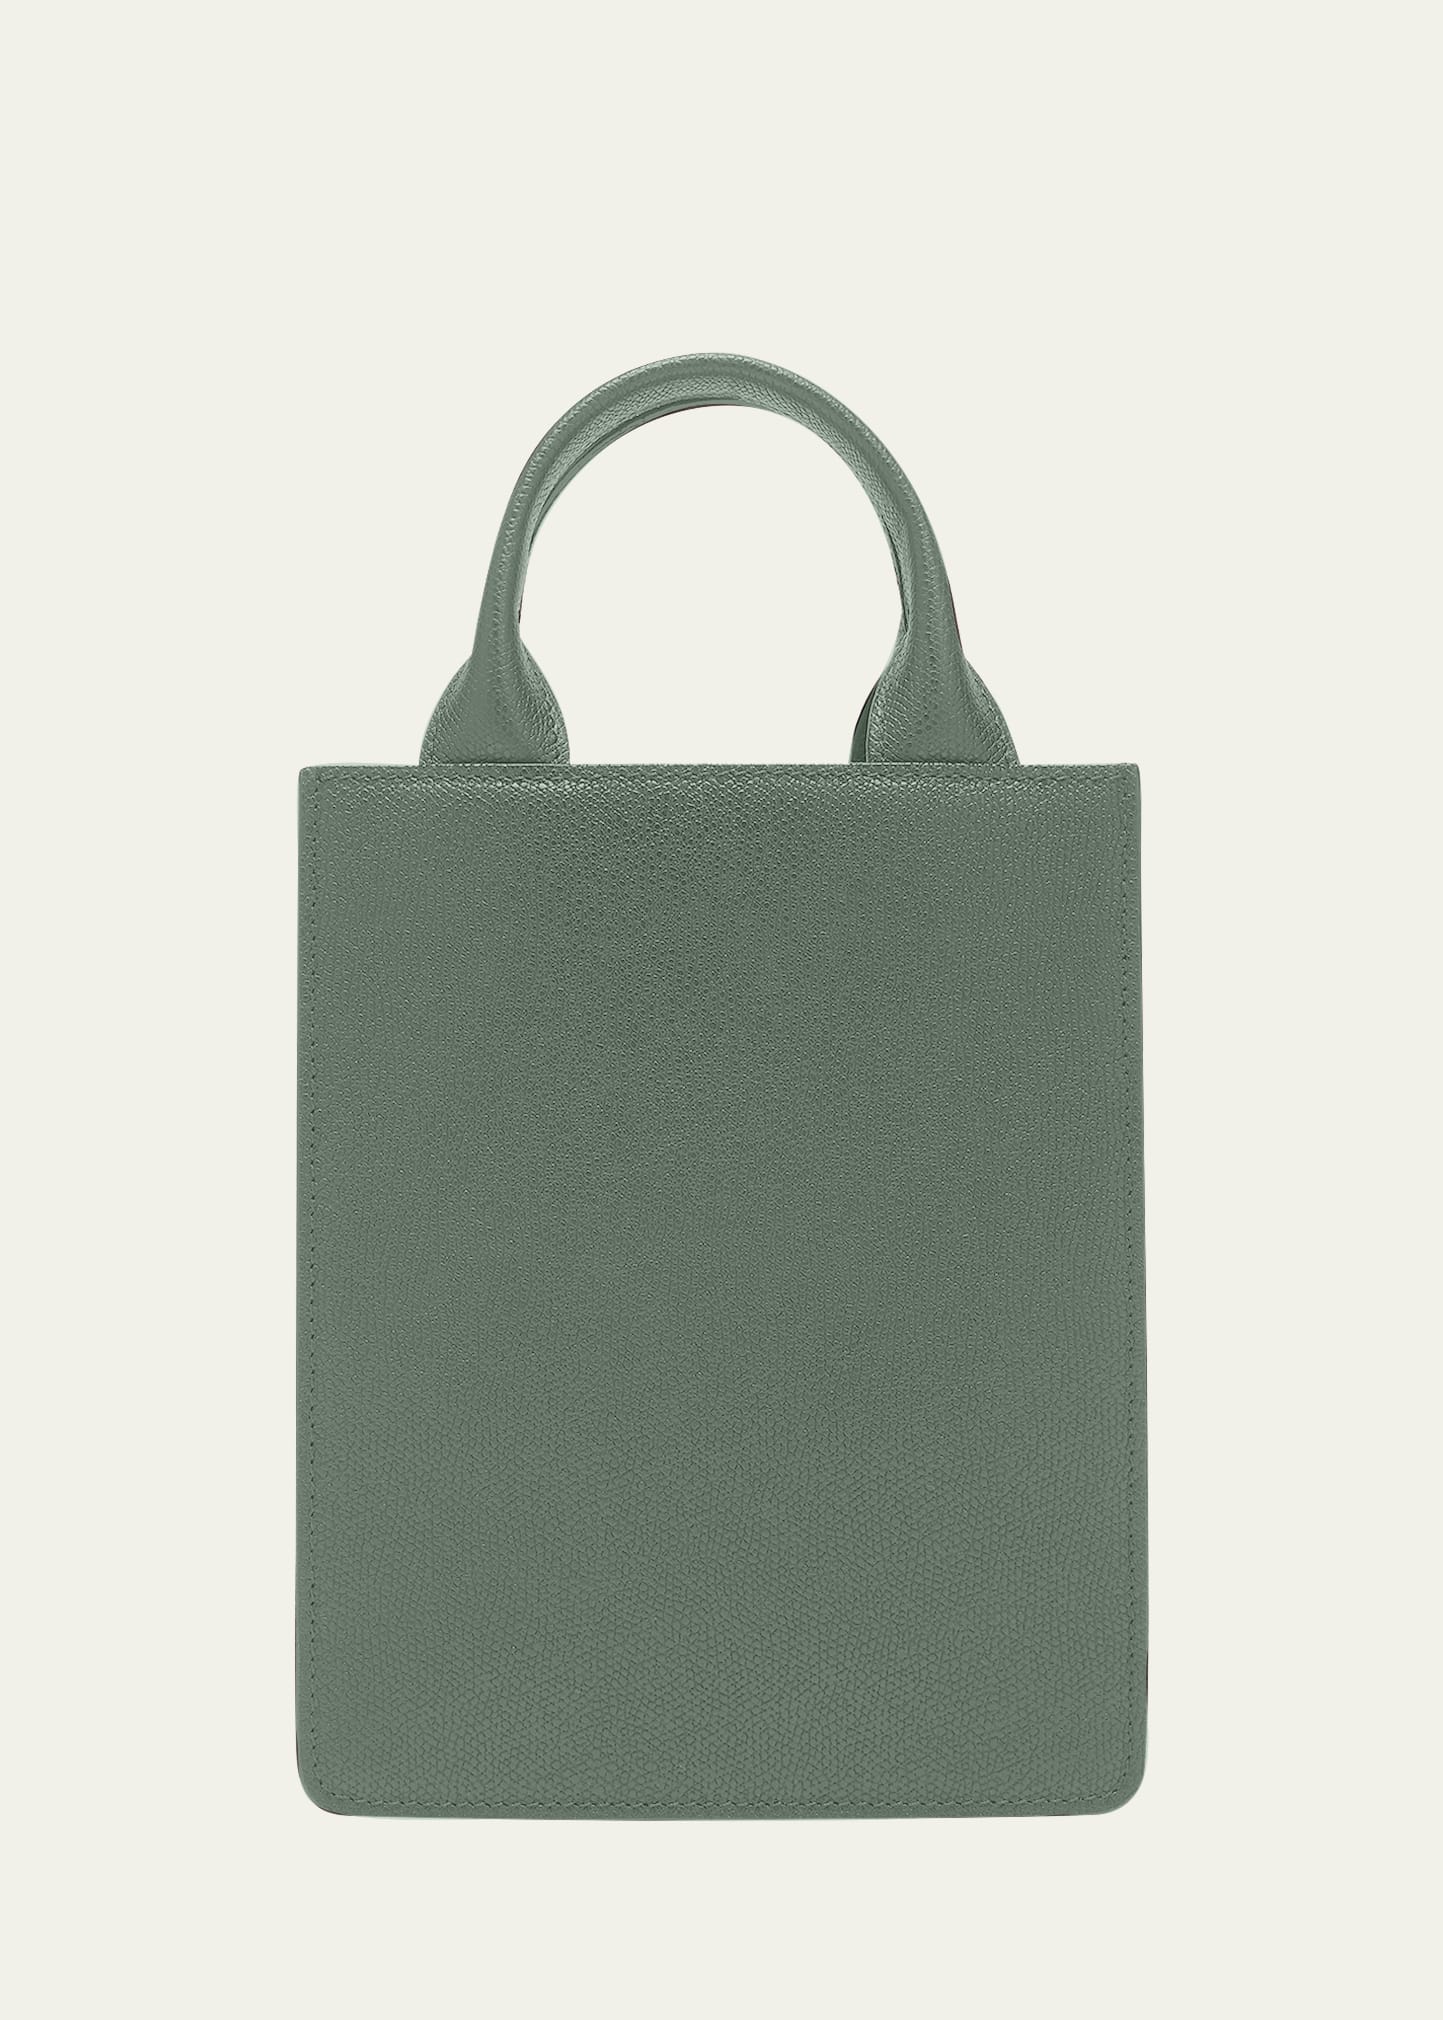 Valextra Mini Boxy Shopping Top Handle Bag In Vmu Muschio